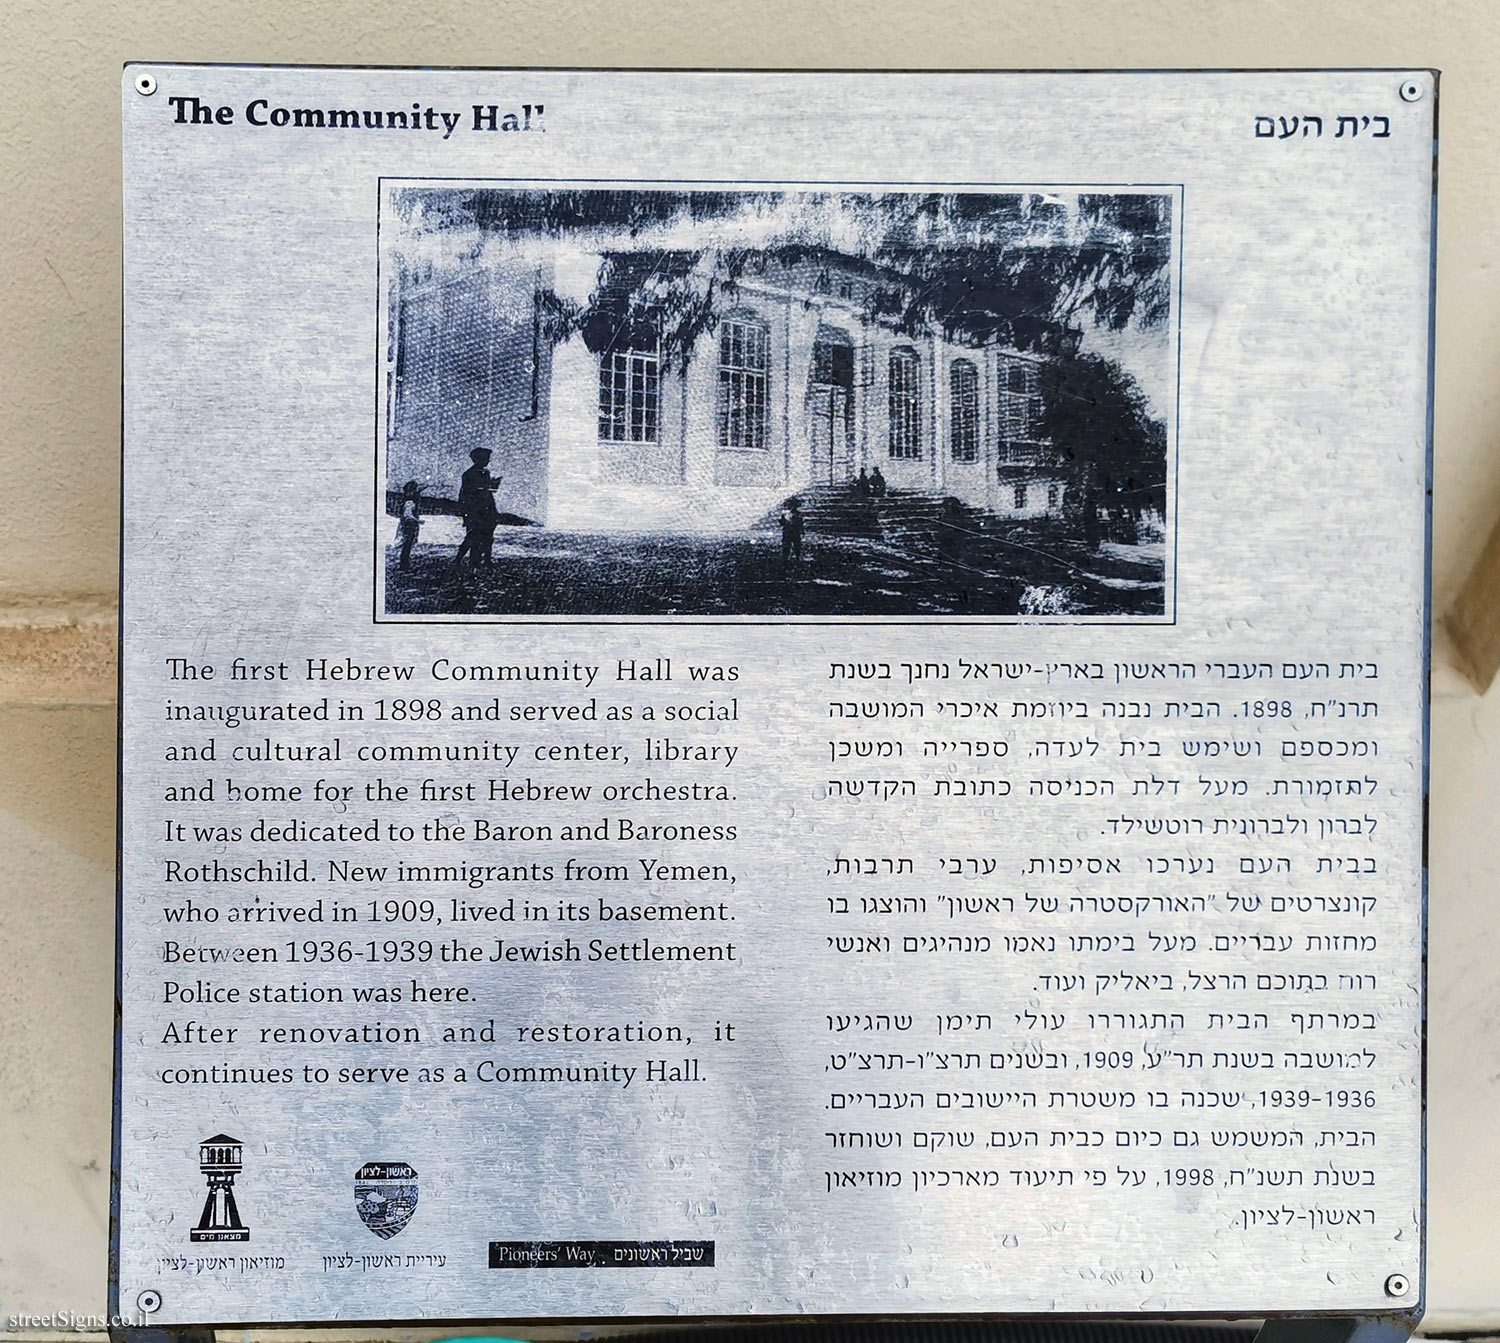 Rishon LeTsiyon - The Community Hall